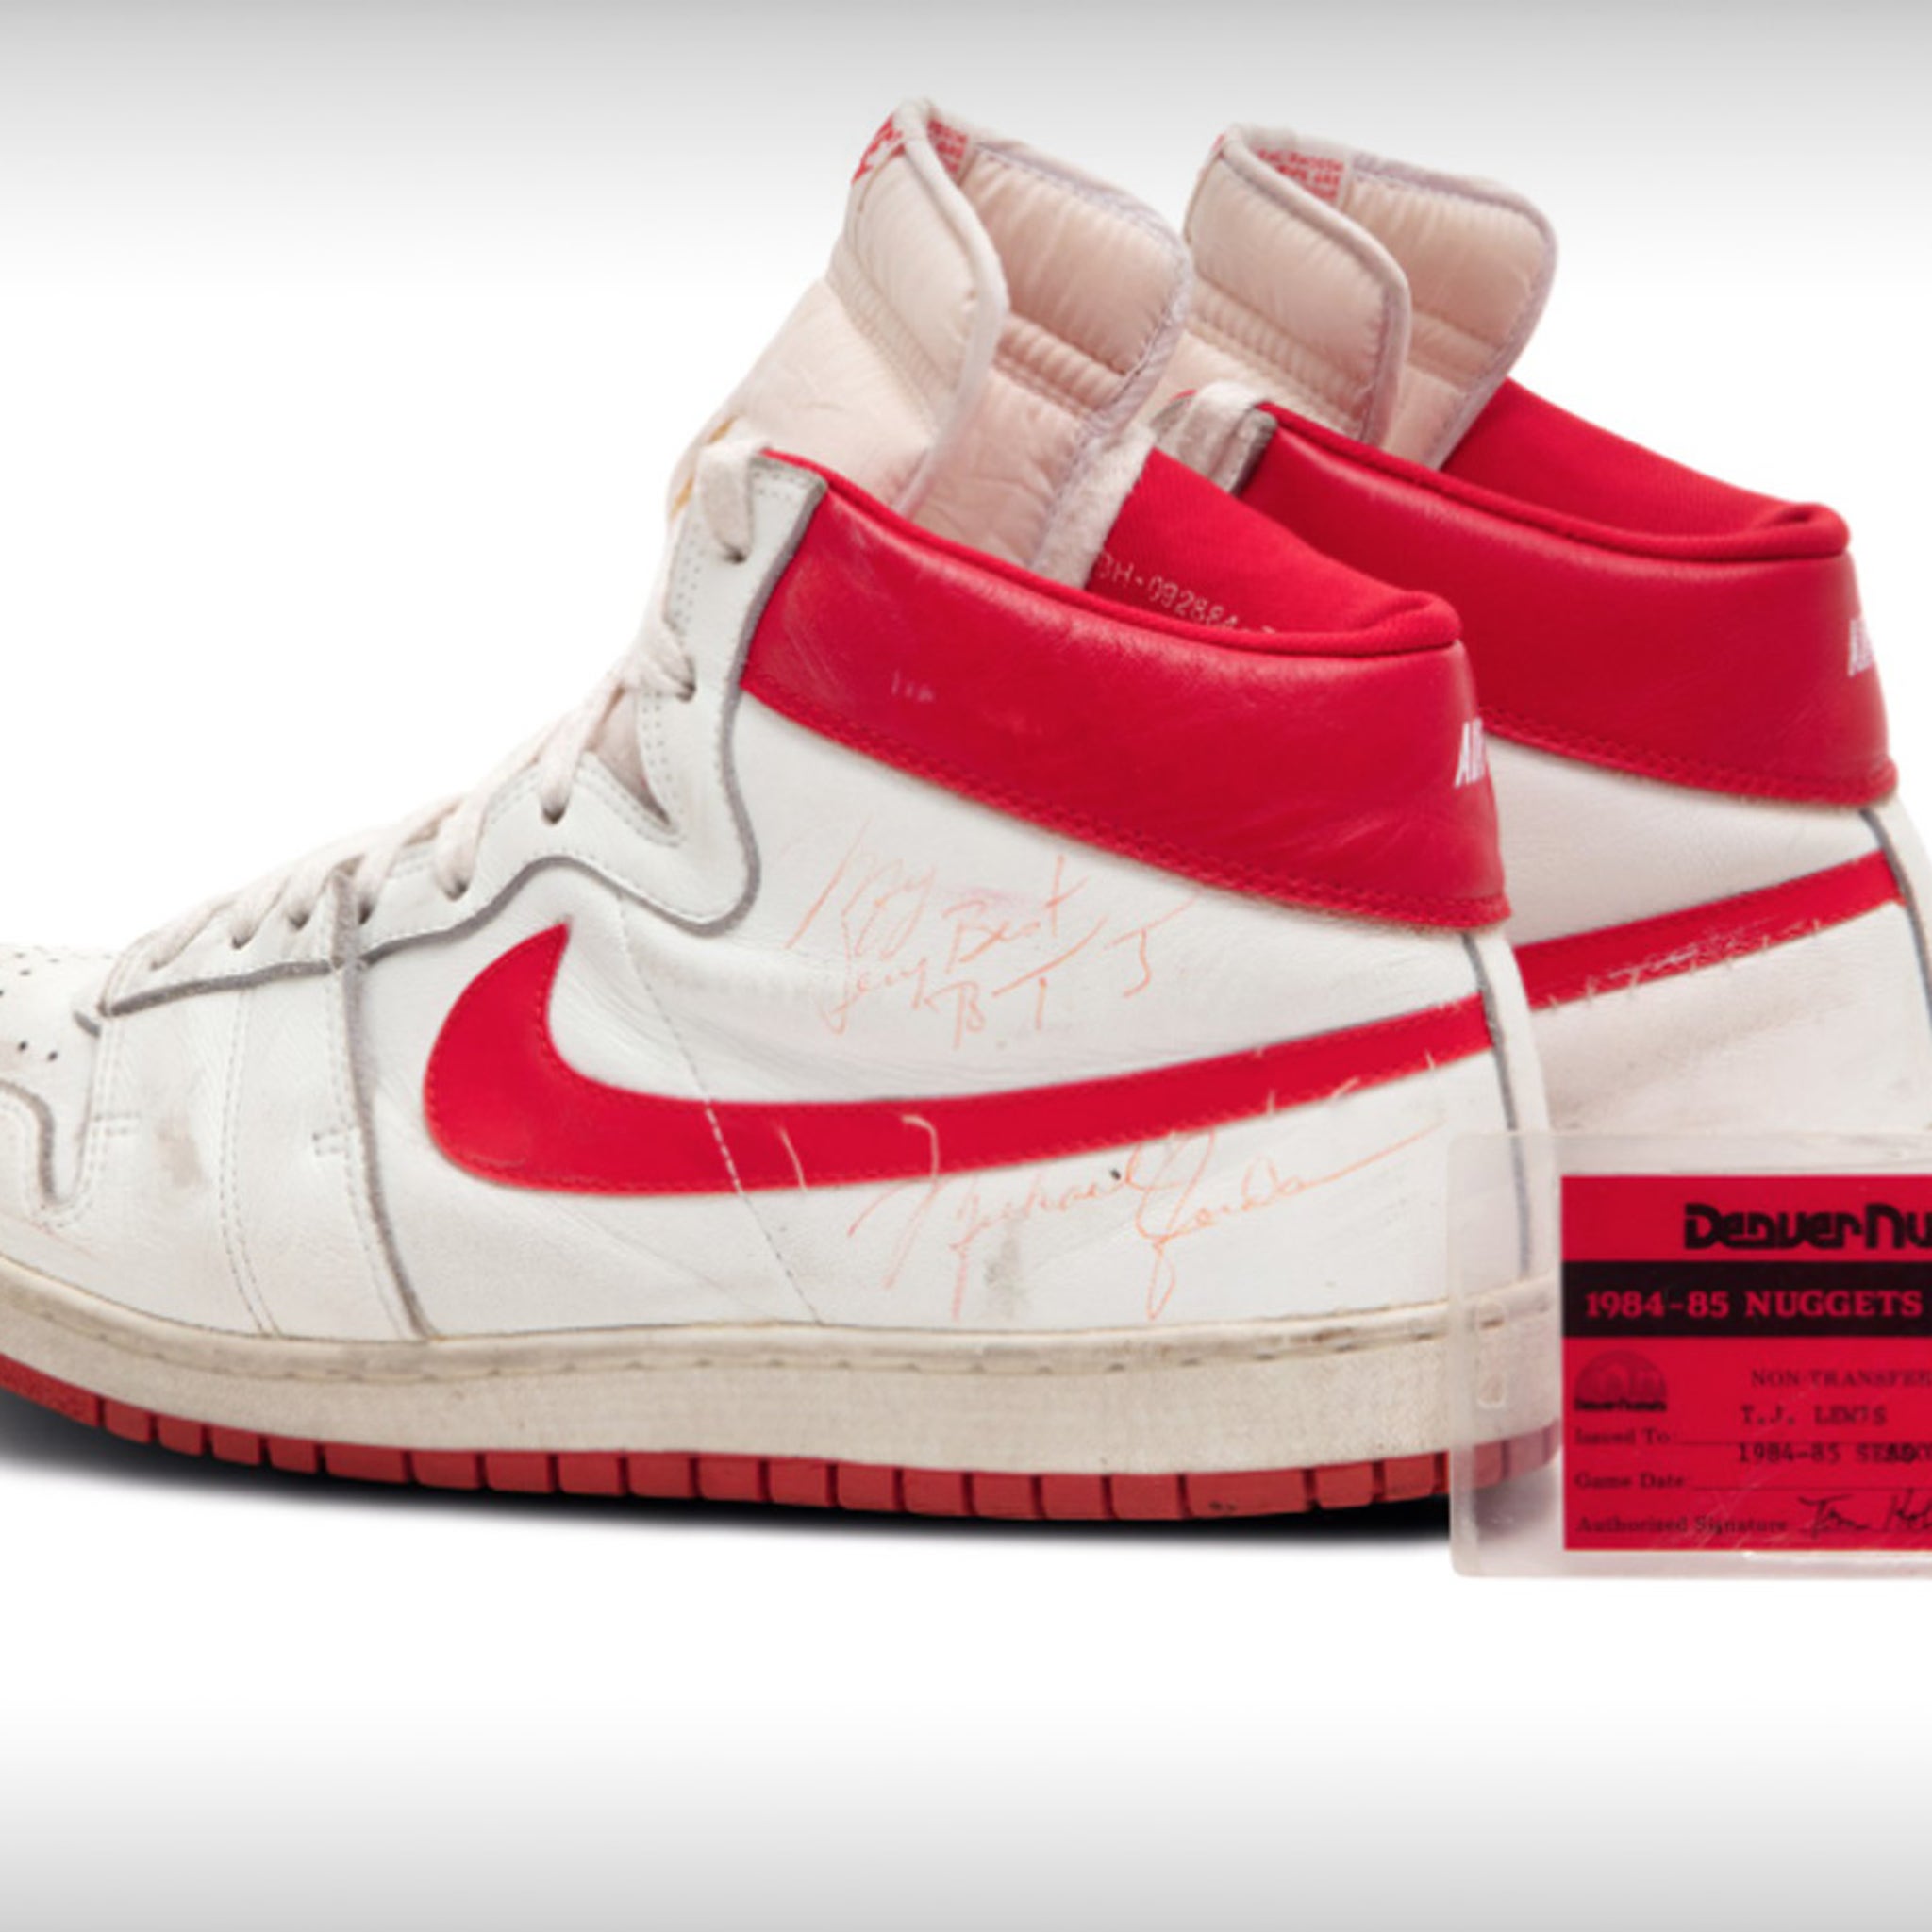 Vista Relámpago plato Michael Jordan's Worn & Signed 1984 Nikes Sell For Record $1.4 Million